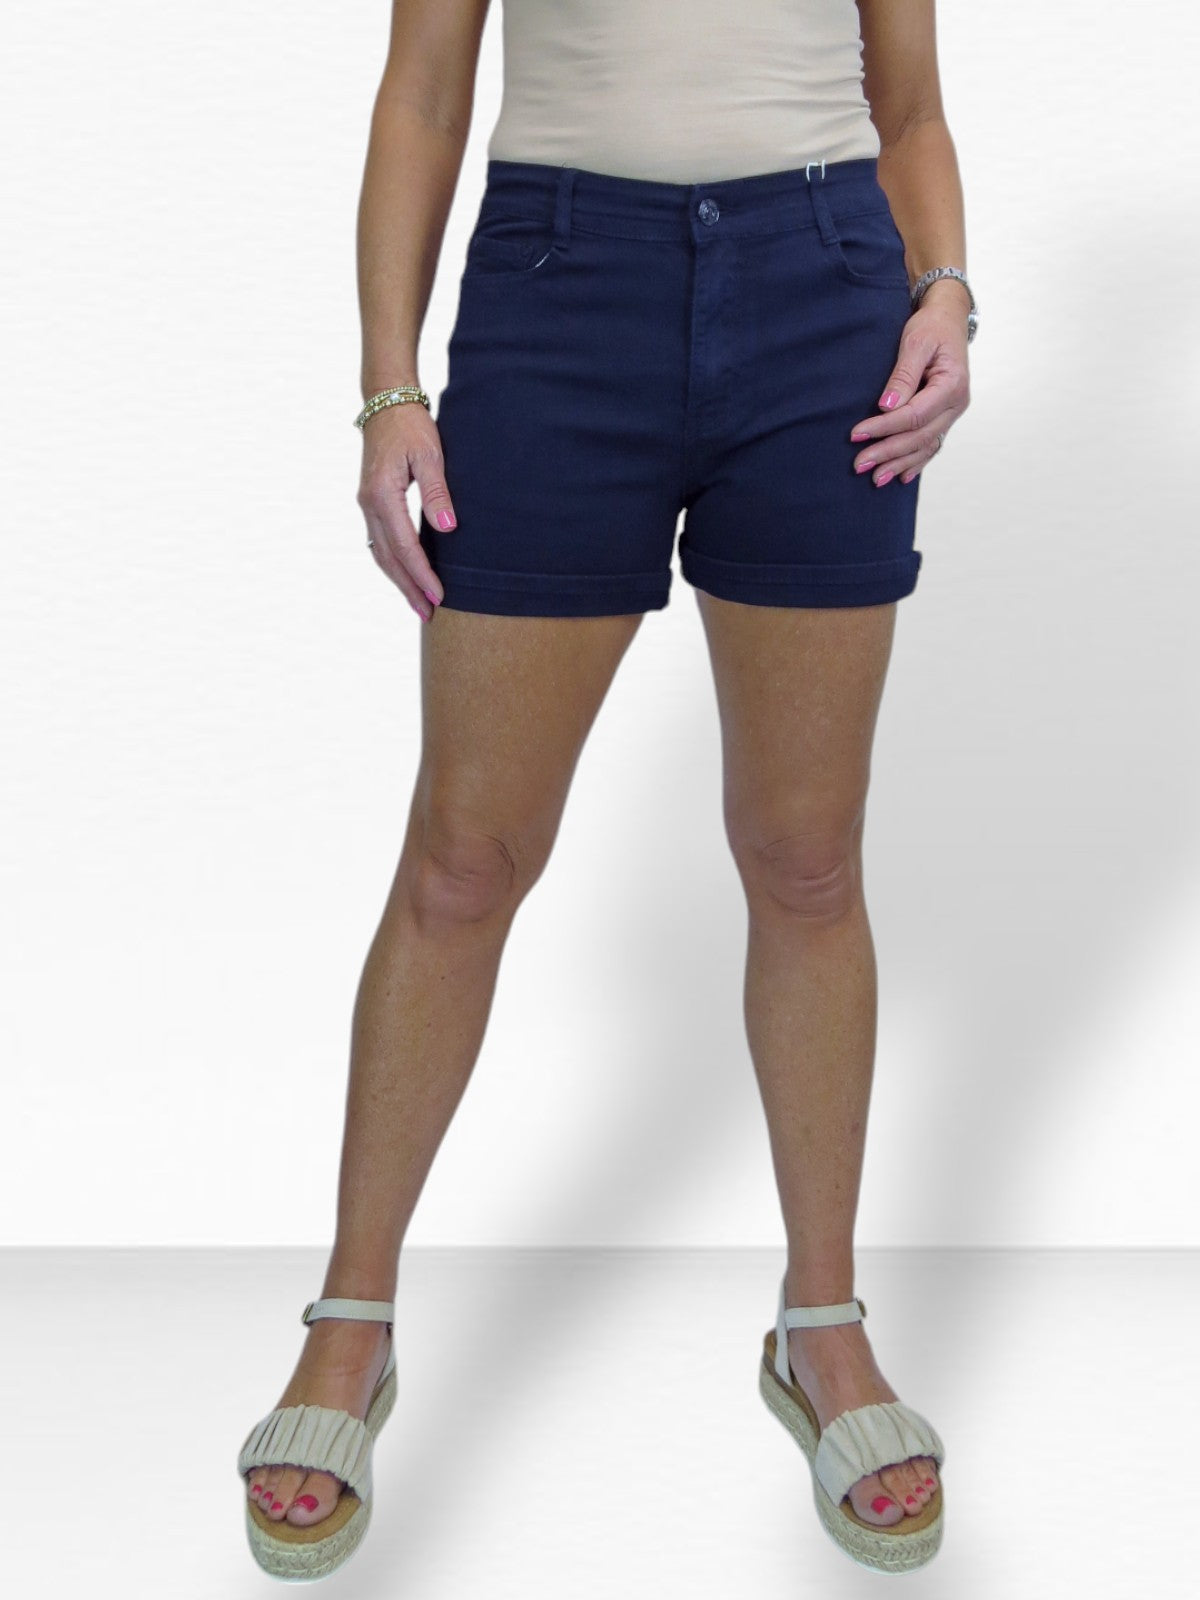 Women's Summer Denim Slim Fit Shorts with Turn Up Cuff Navy Blue